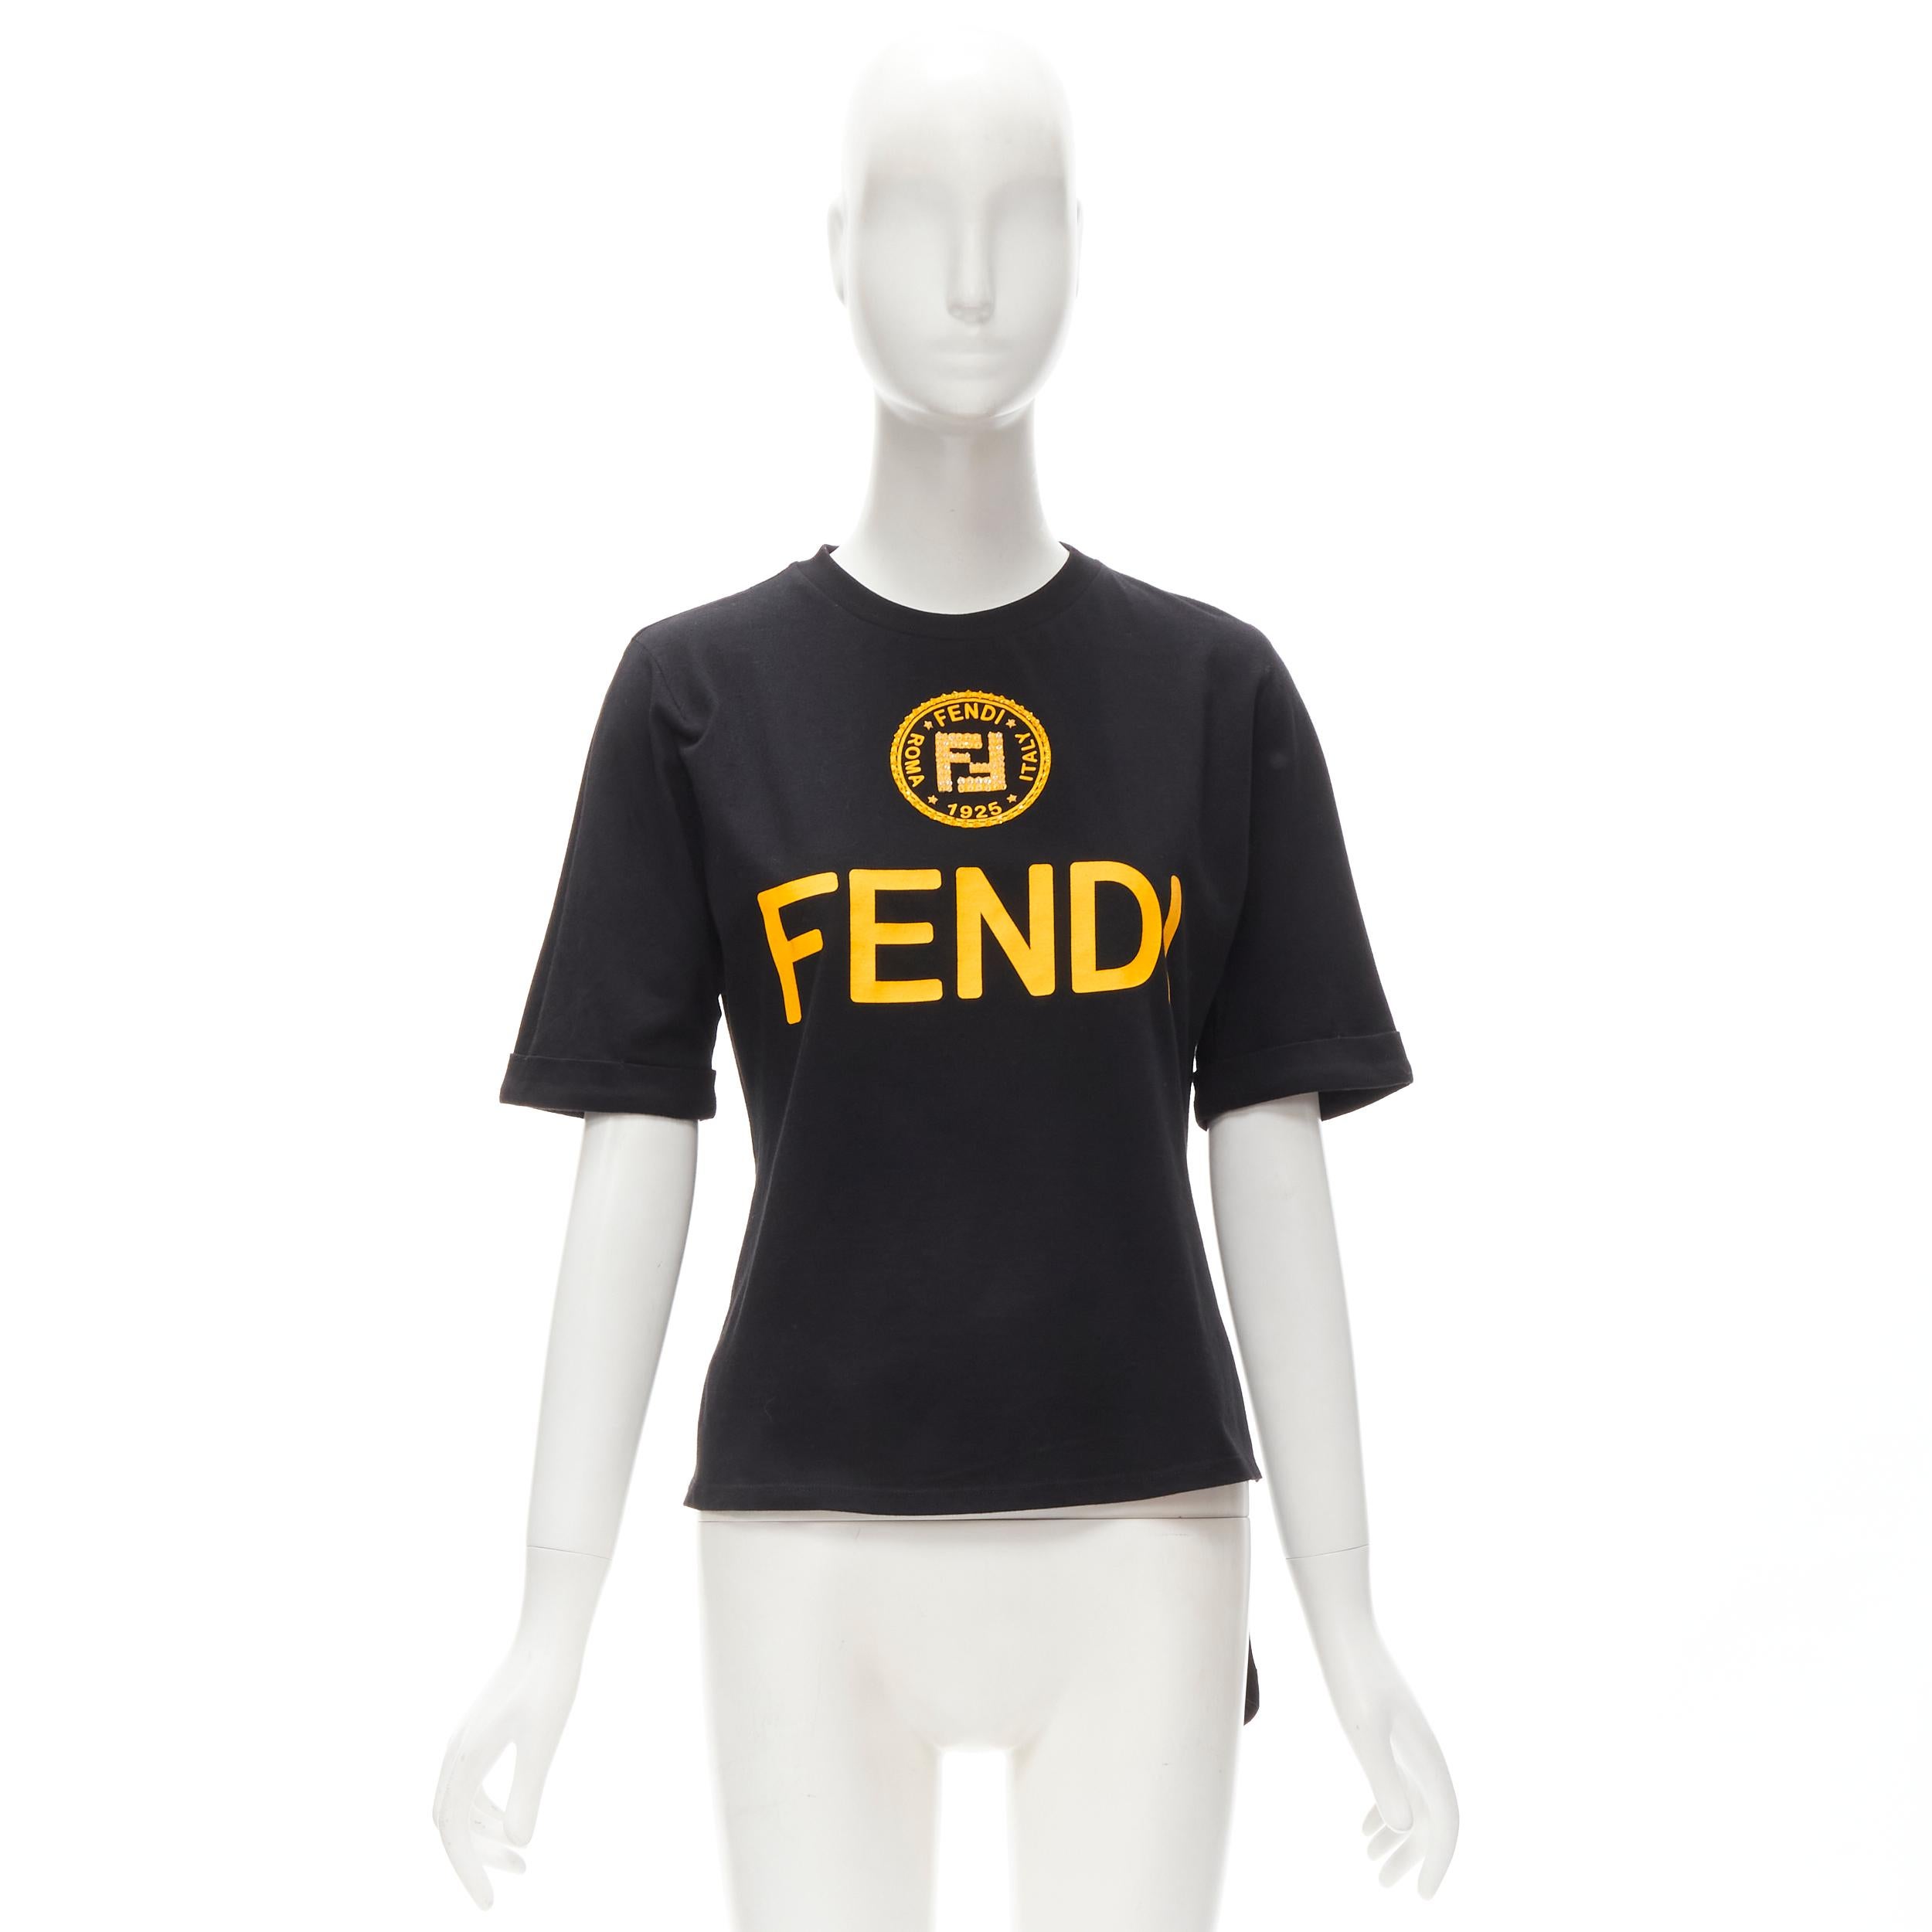 FENDI ROMA FF bead embellished logo black yellow cotton tshirt S 2